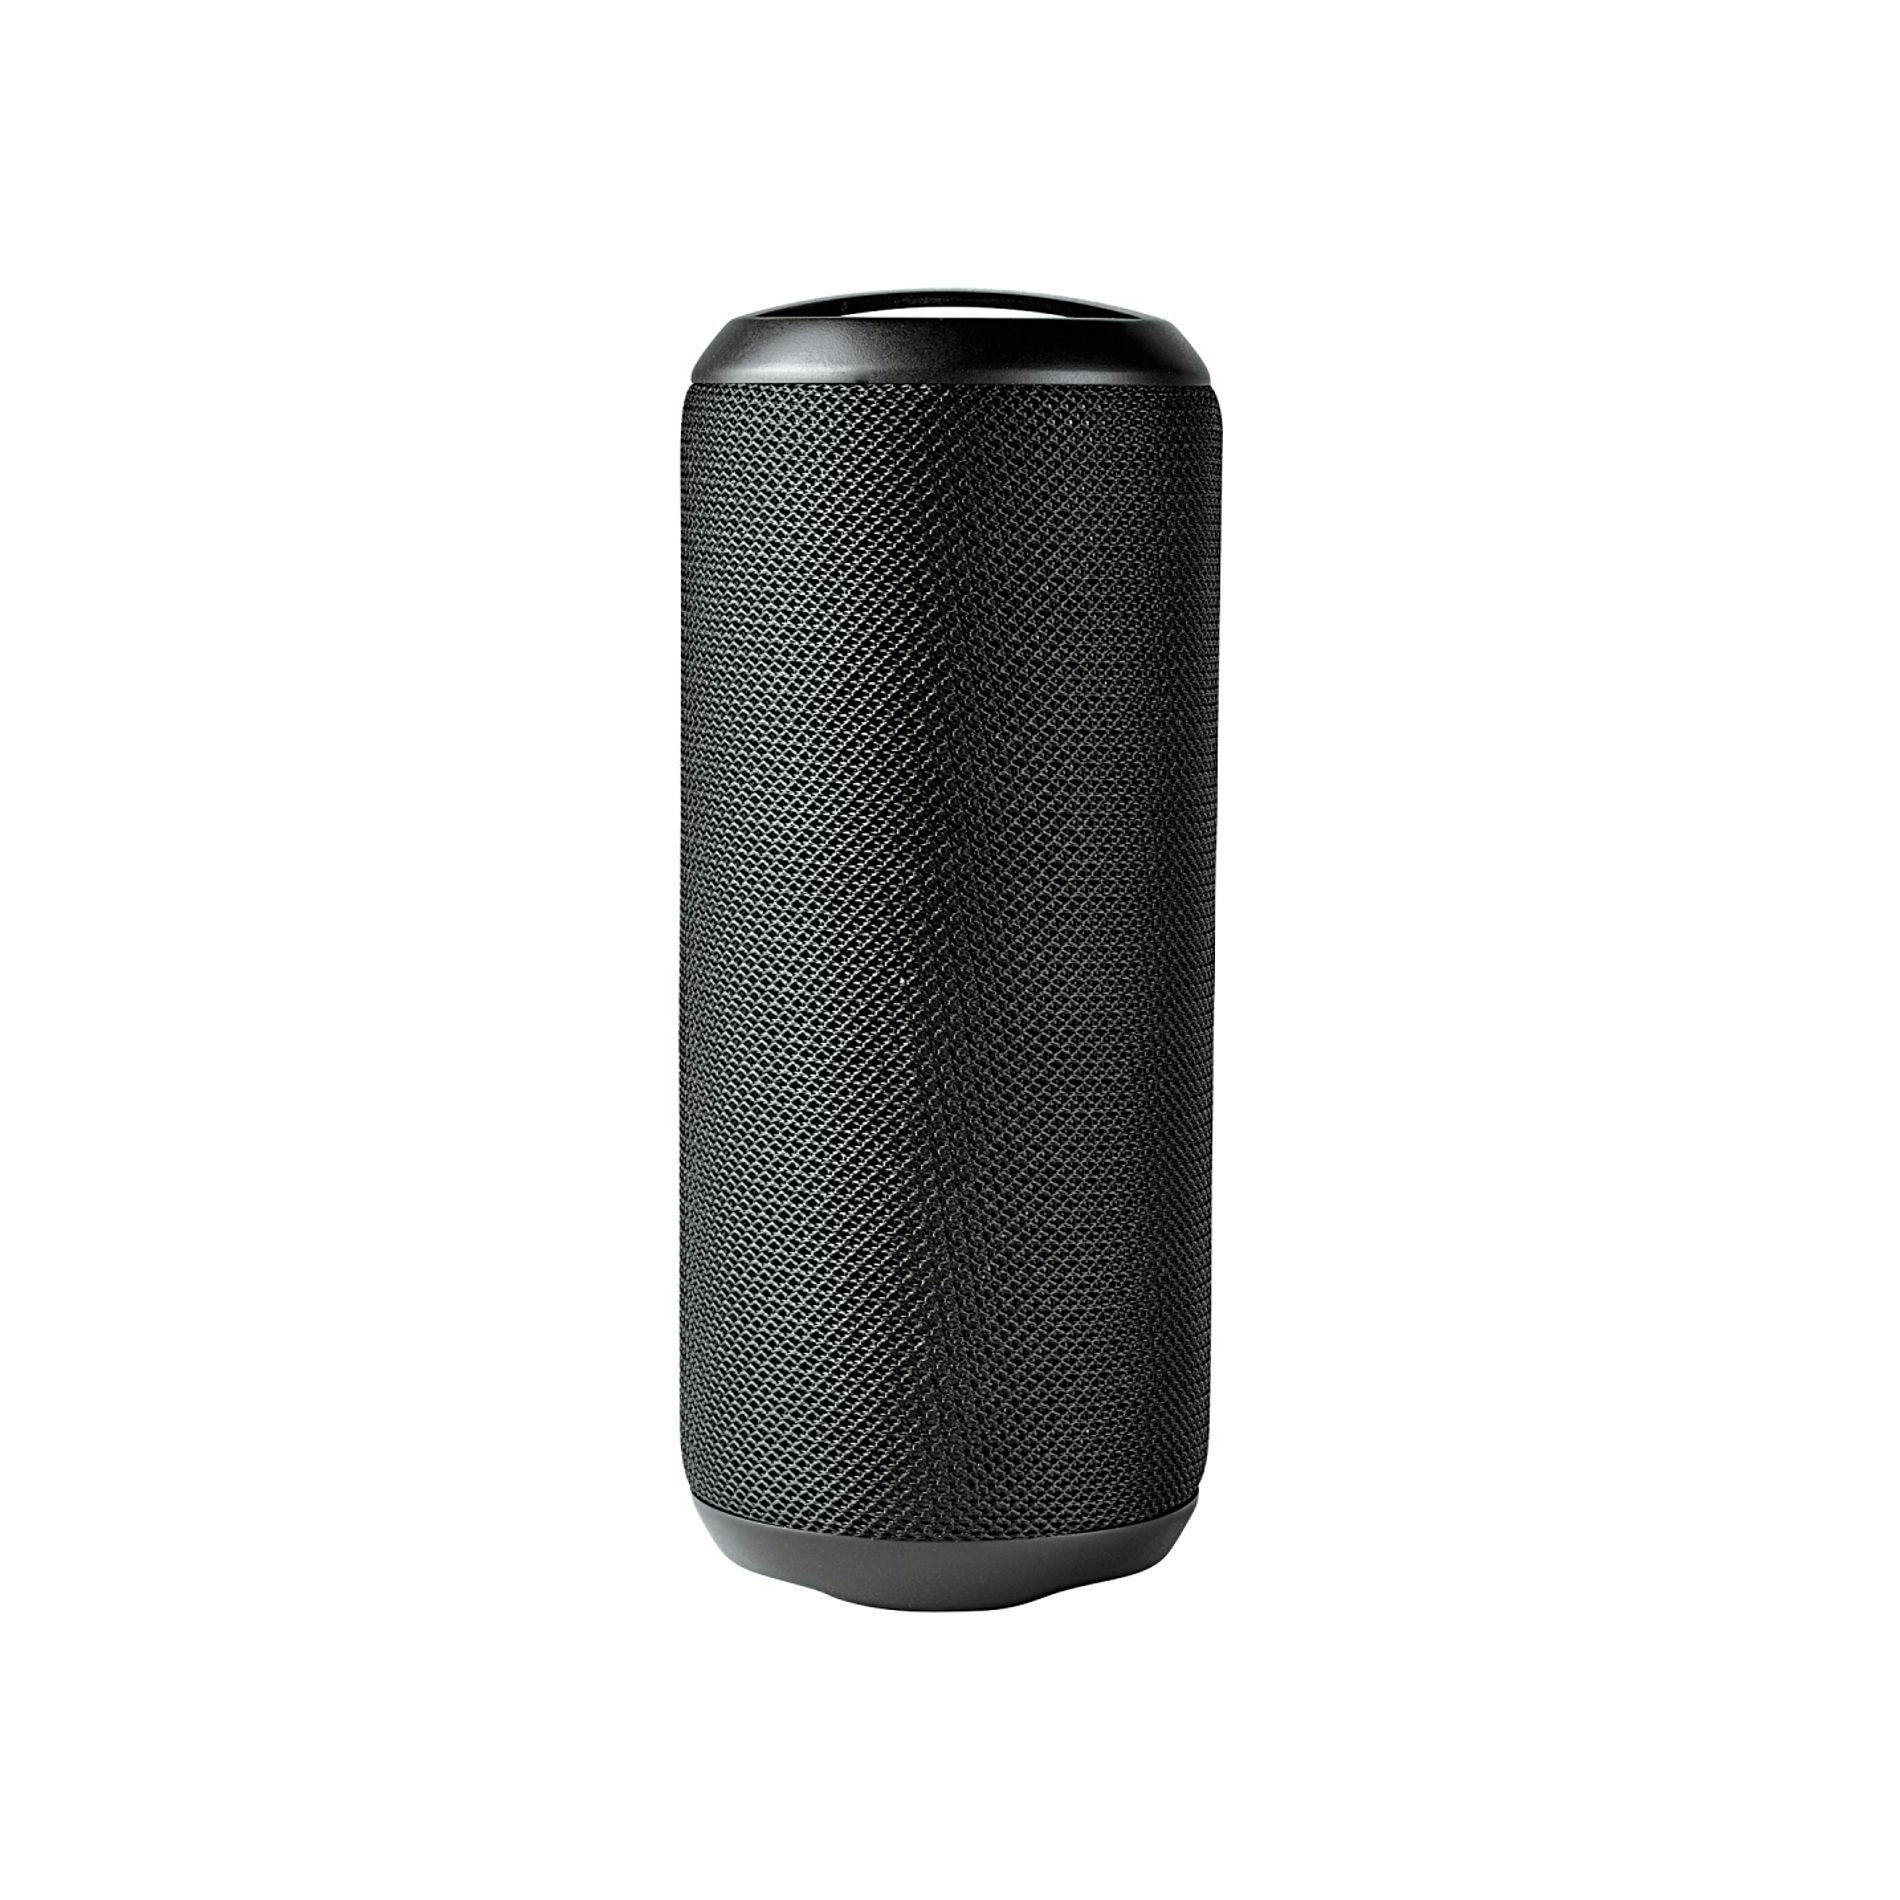 Rugged Fabric Outdoor Waterproof Bluetooth Speaker - additional Image 2